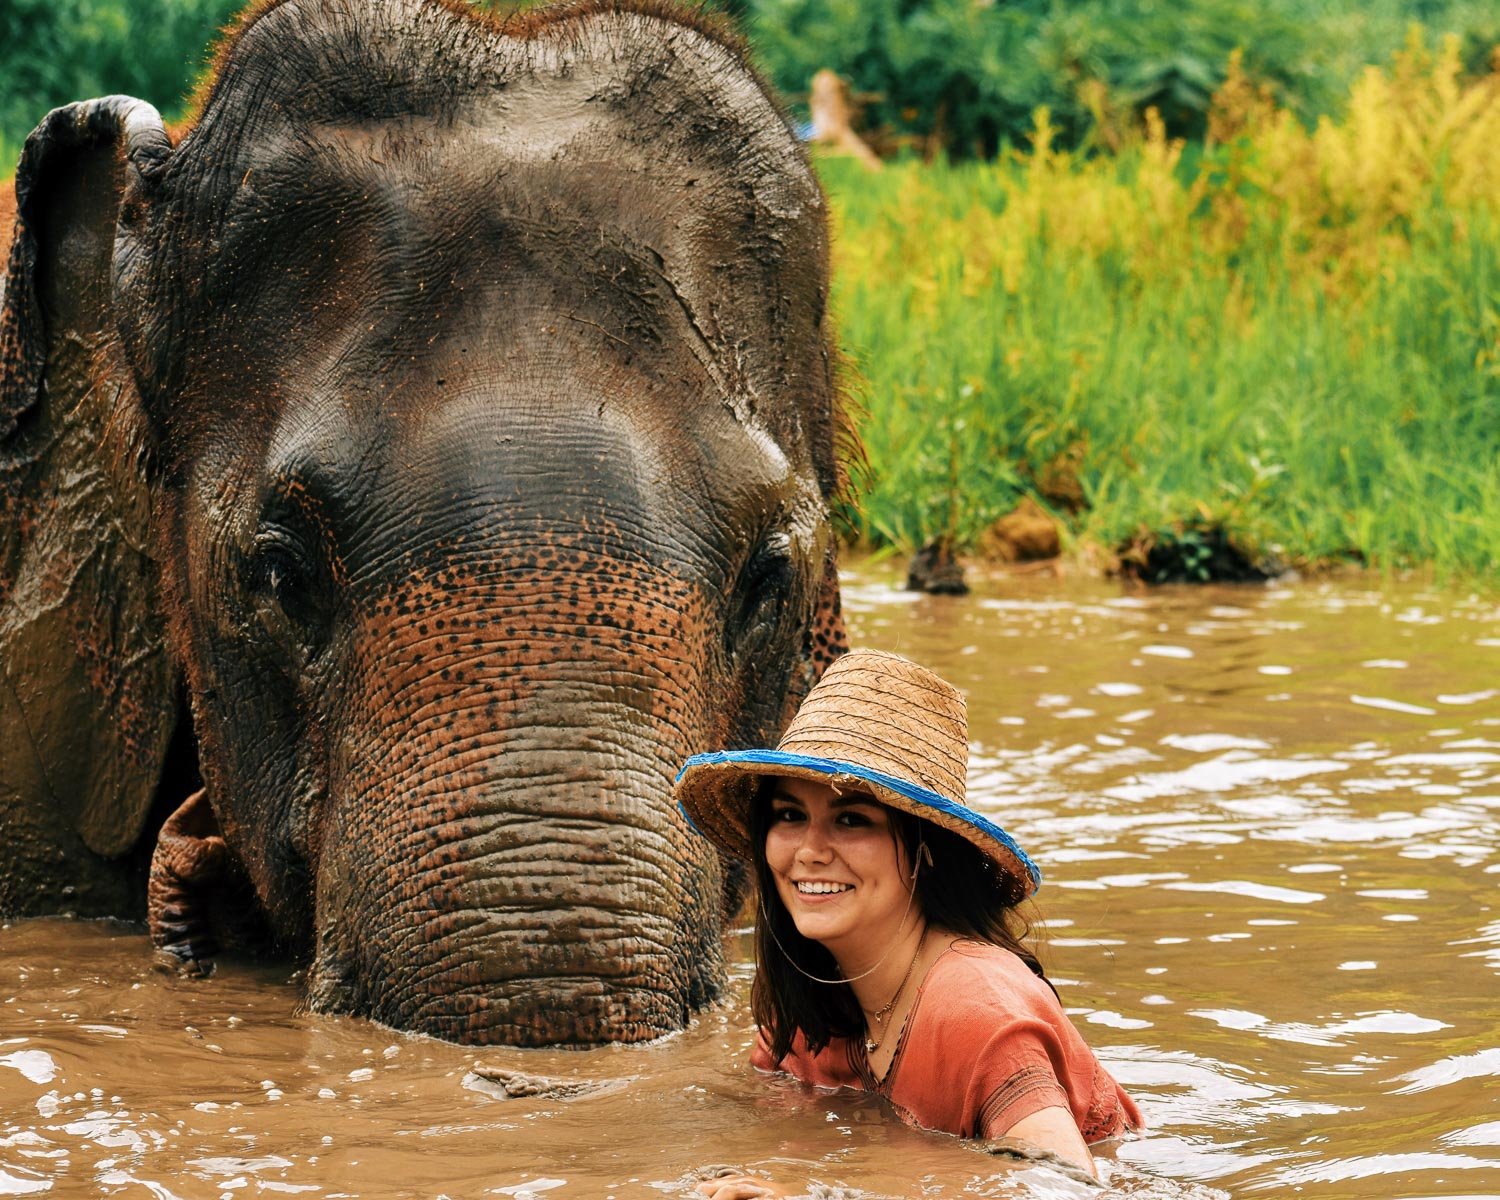 THAILAND: ELEPHANTS, EDUCATION, AND EXPLORATION